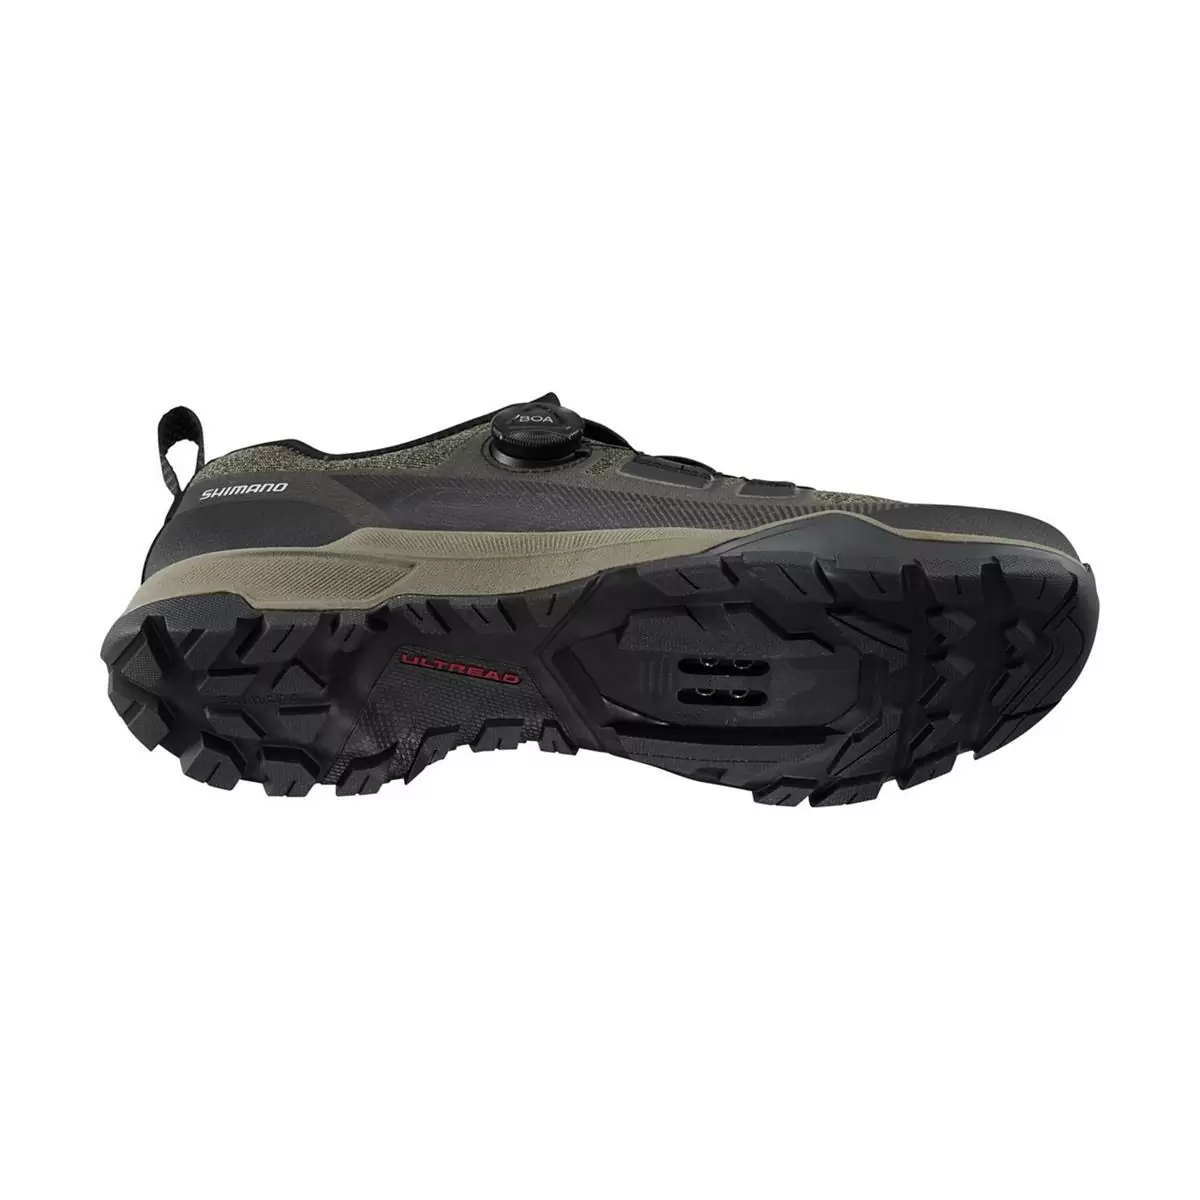 Trekking / MTB Shoes SH-EX700 Green Size 39 #2